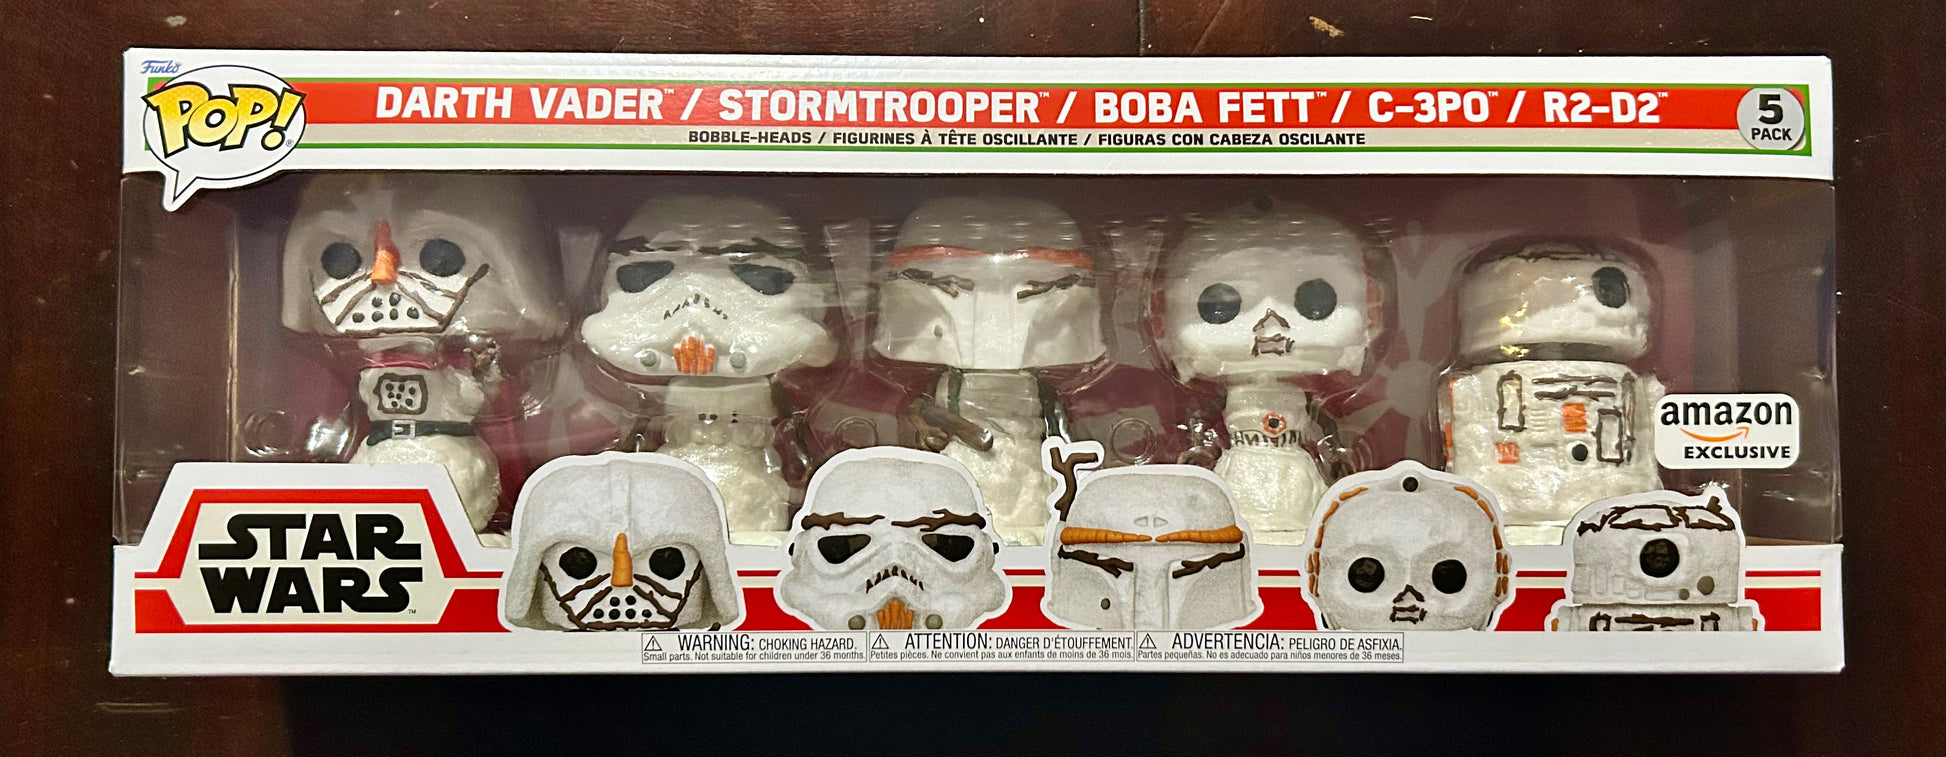 Pop! Star Wars Holiday Snowman 5-Pack